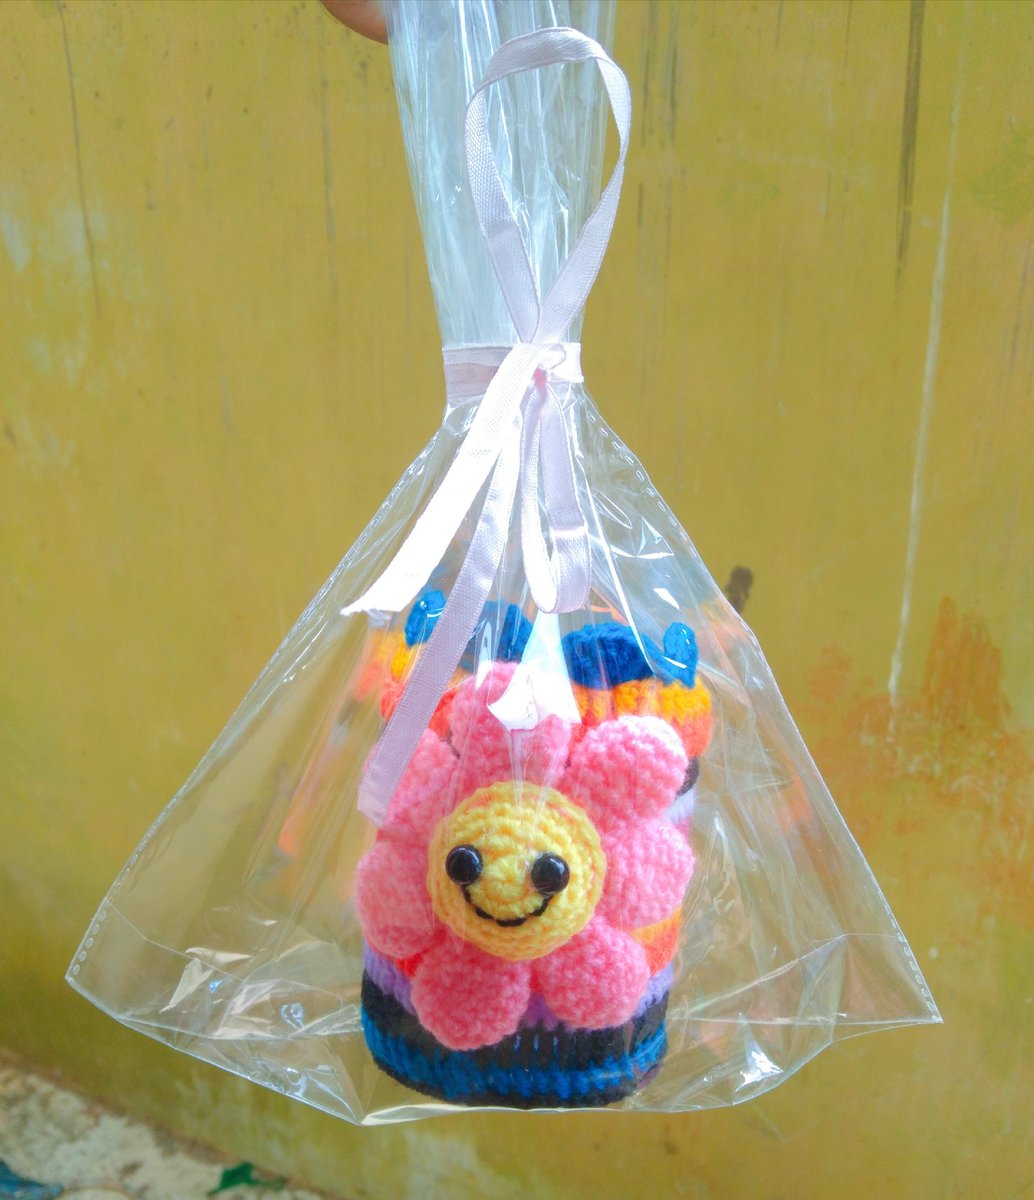 My cute lil flower pen holder 😻🥳

#DaintyCrochet #Srilanka #Puttalam #Crochetpenholder #Crochetlove #Crochetflower